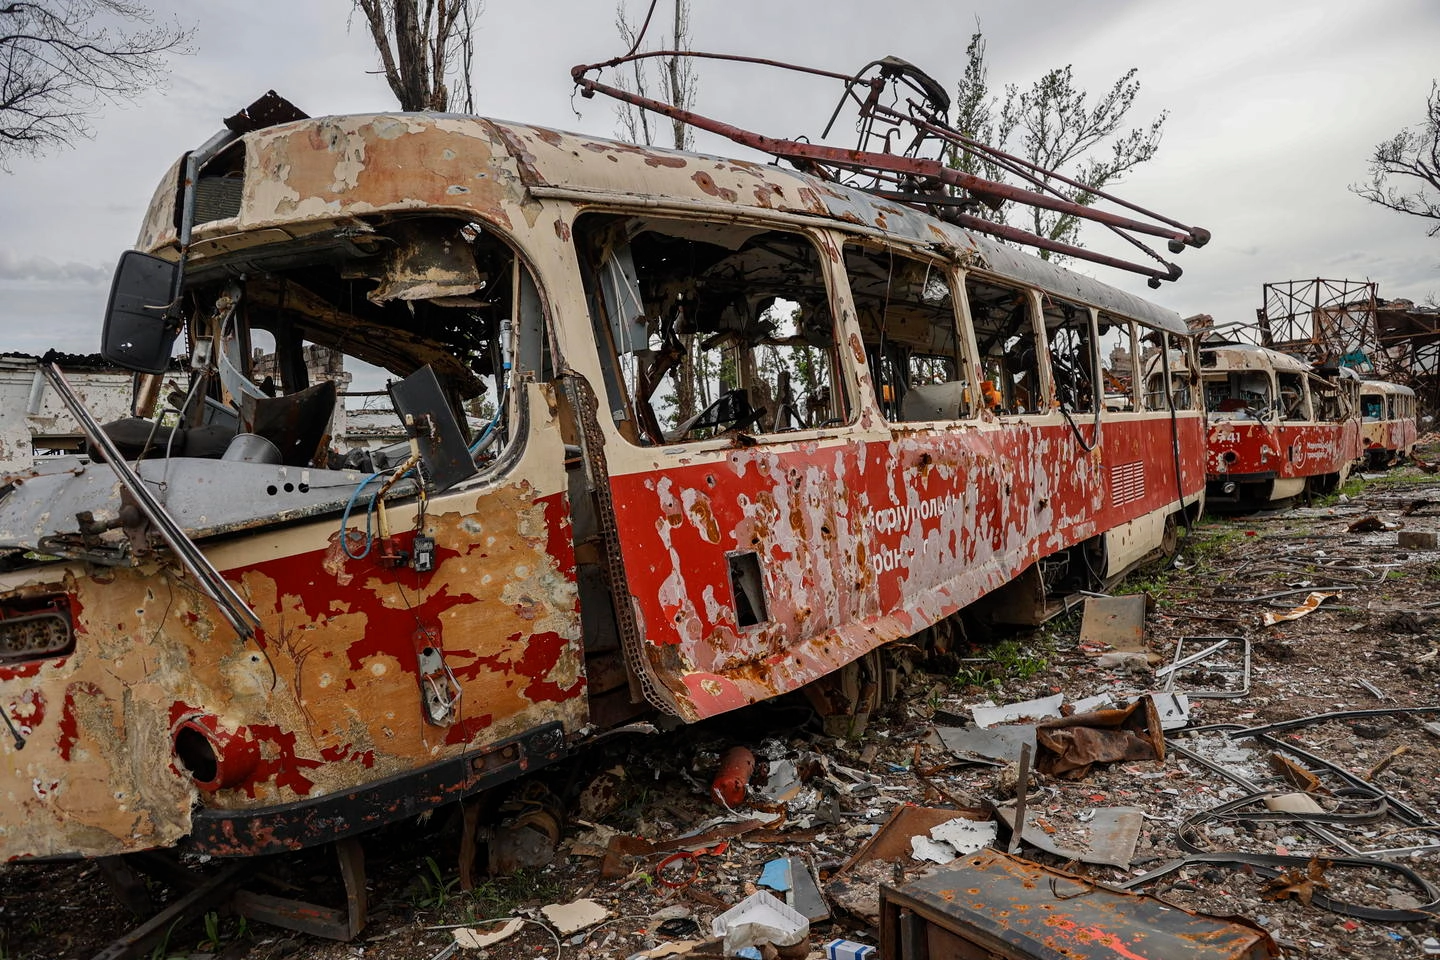 Un tram distrutto a Mariupol (Ansa)